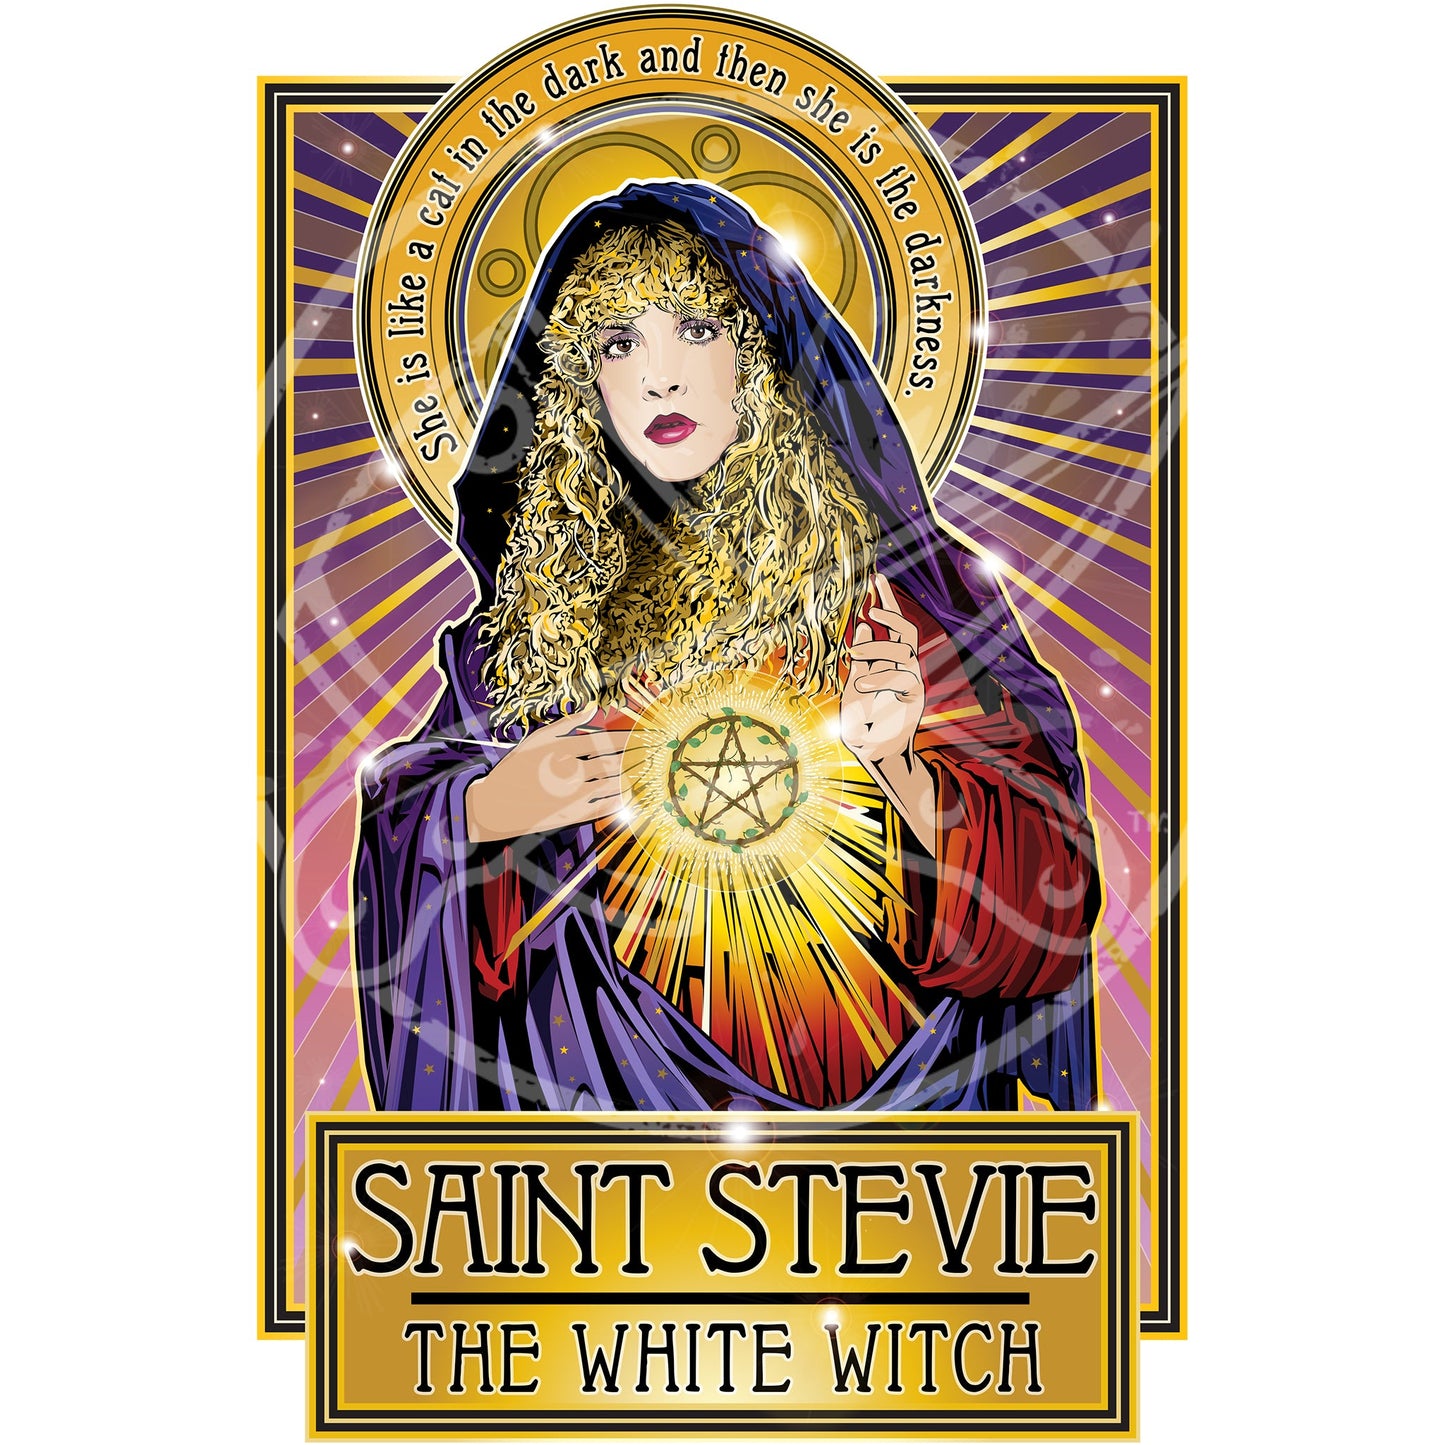 Saint Stevie The White Witch Poster Cleaverandblade.com